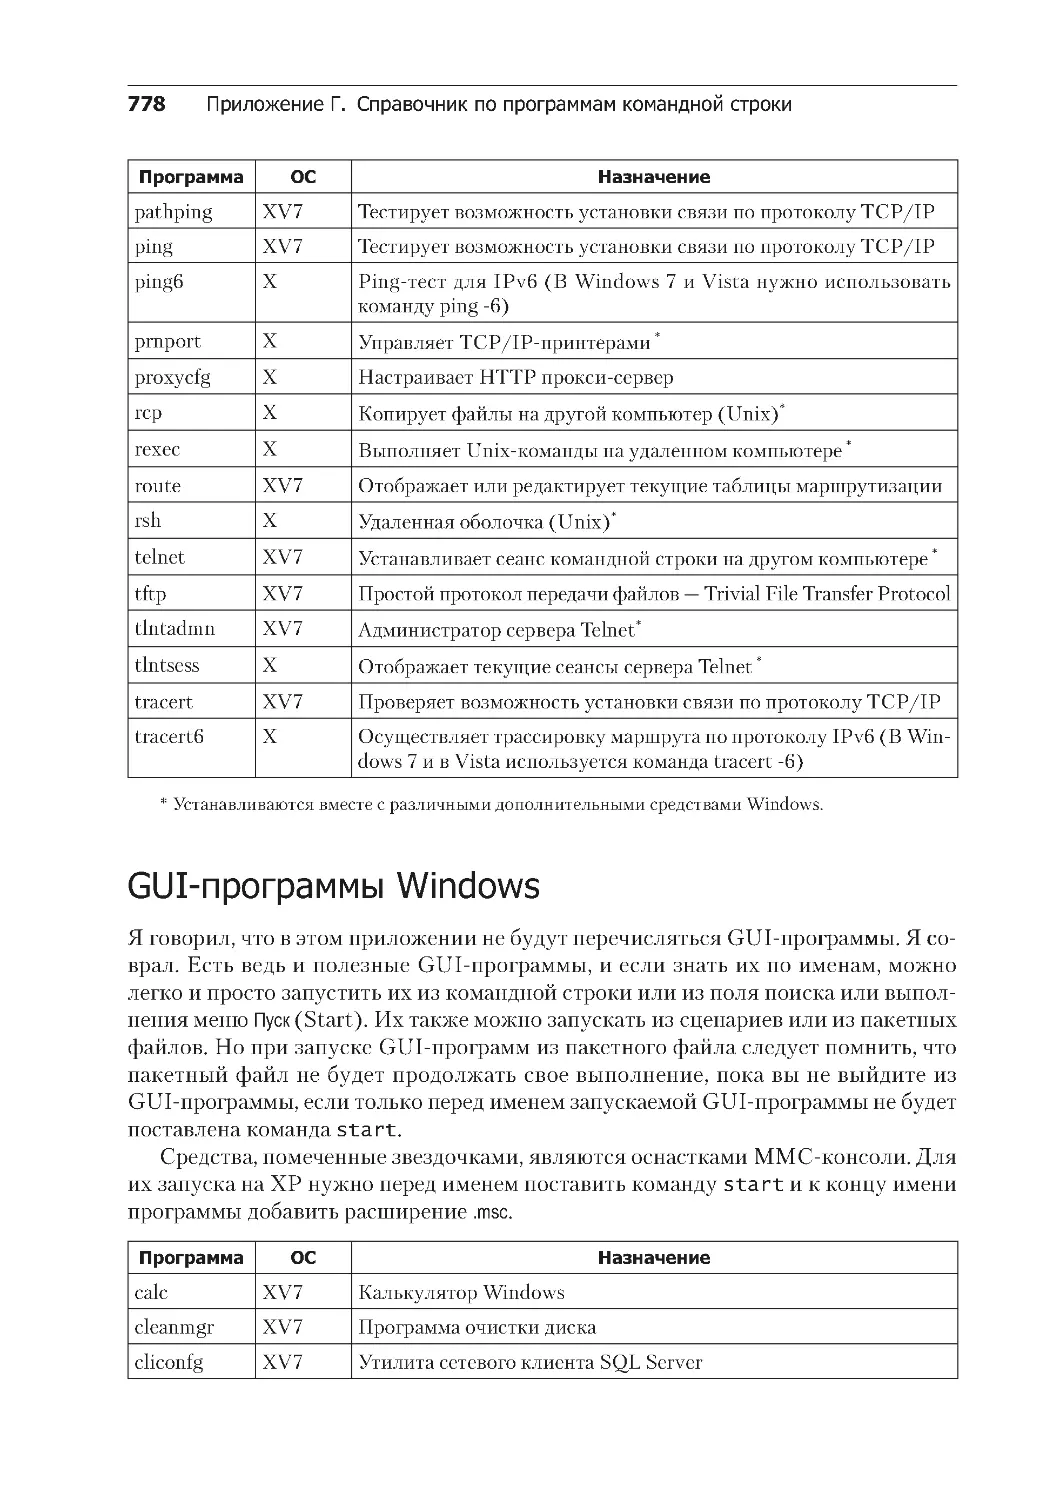 GUI-программы Windows